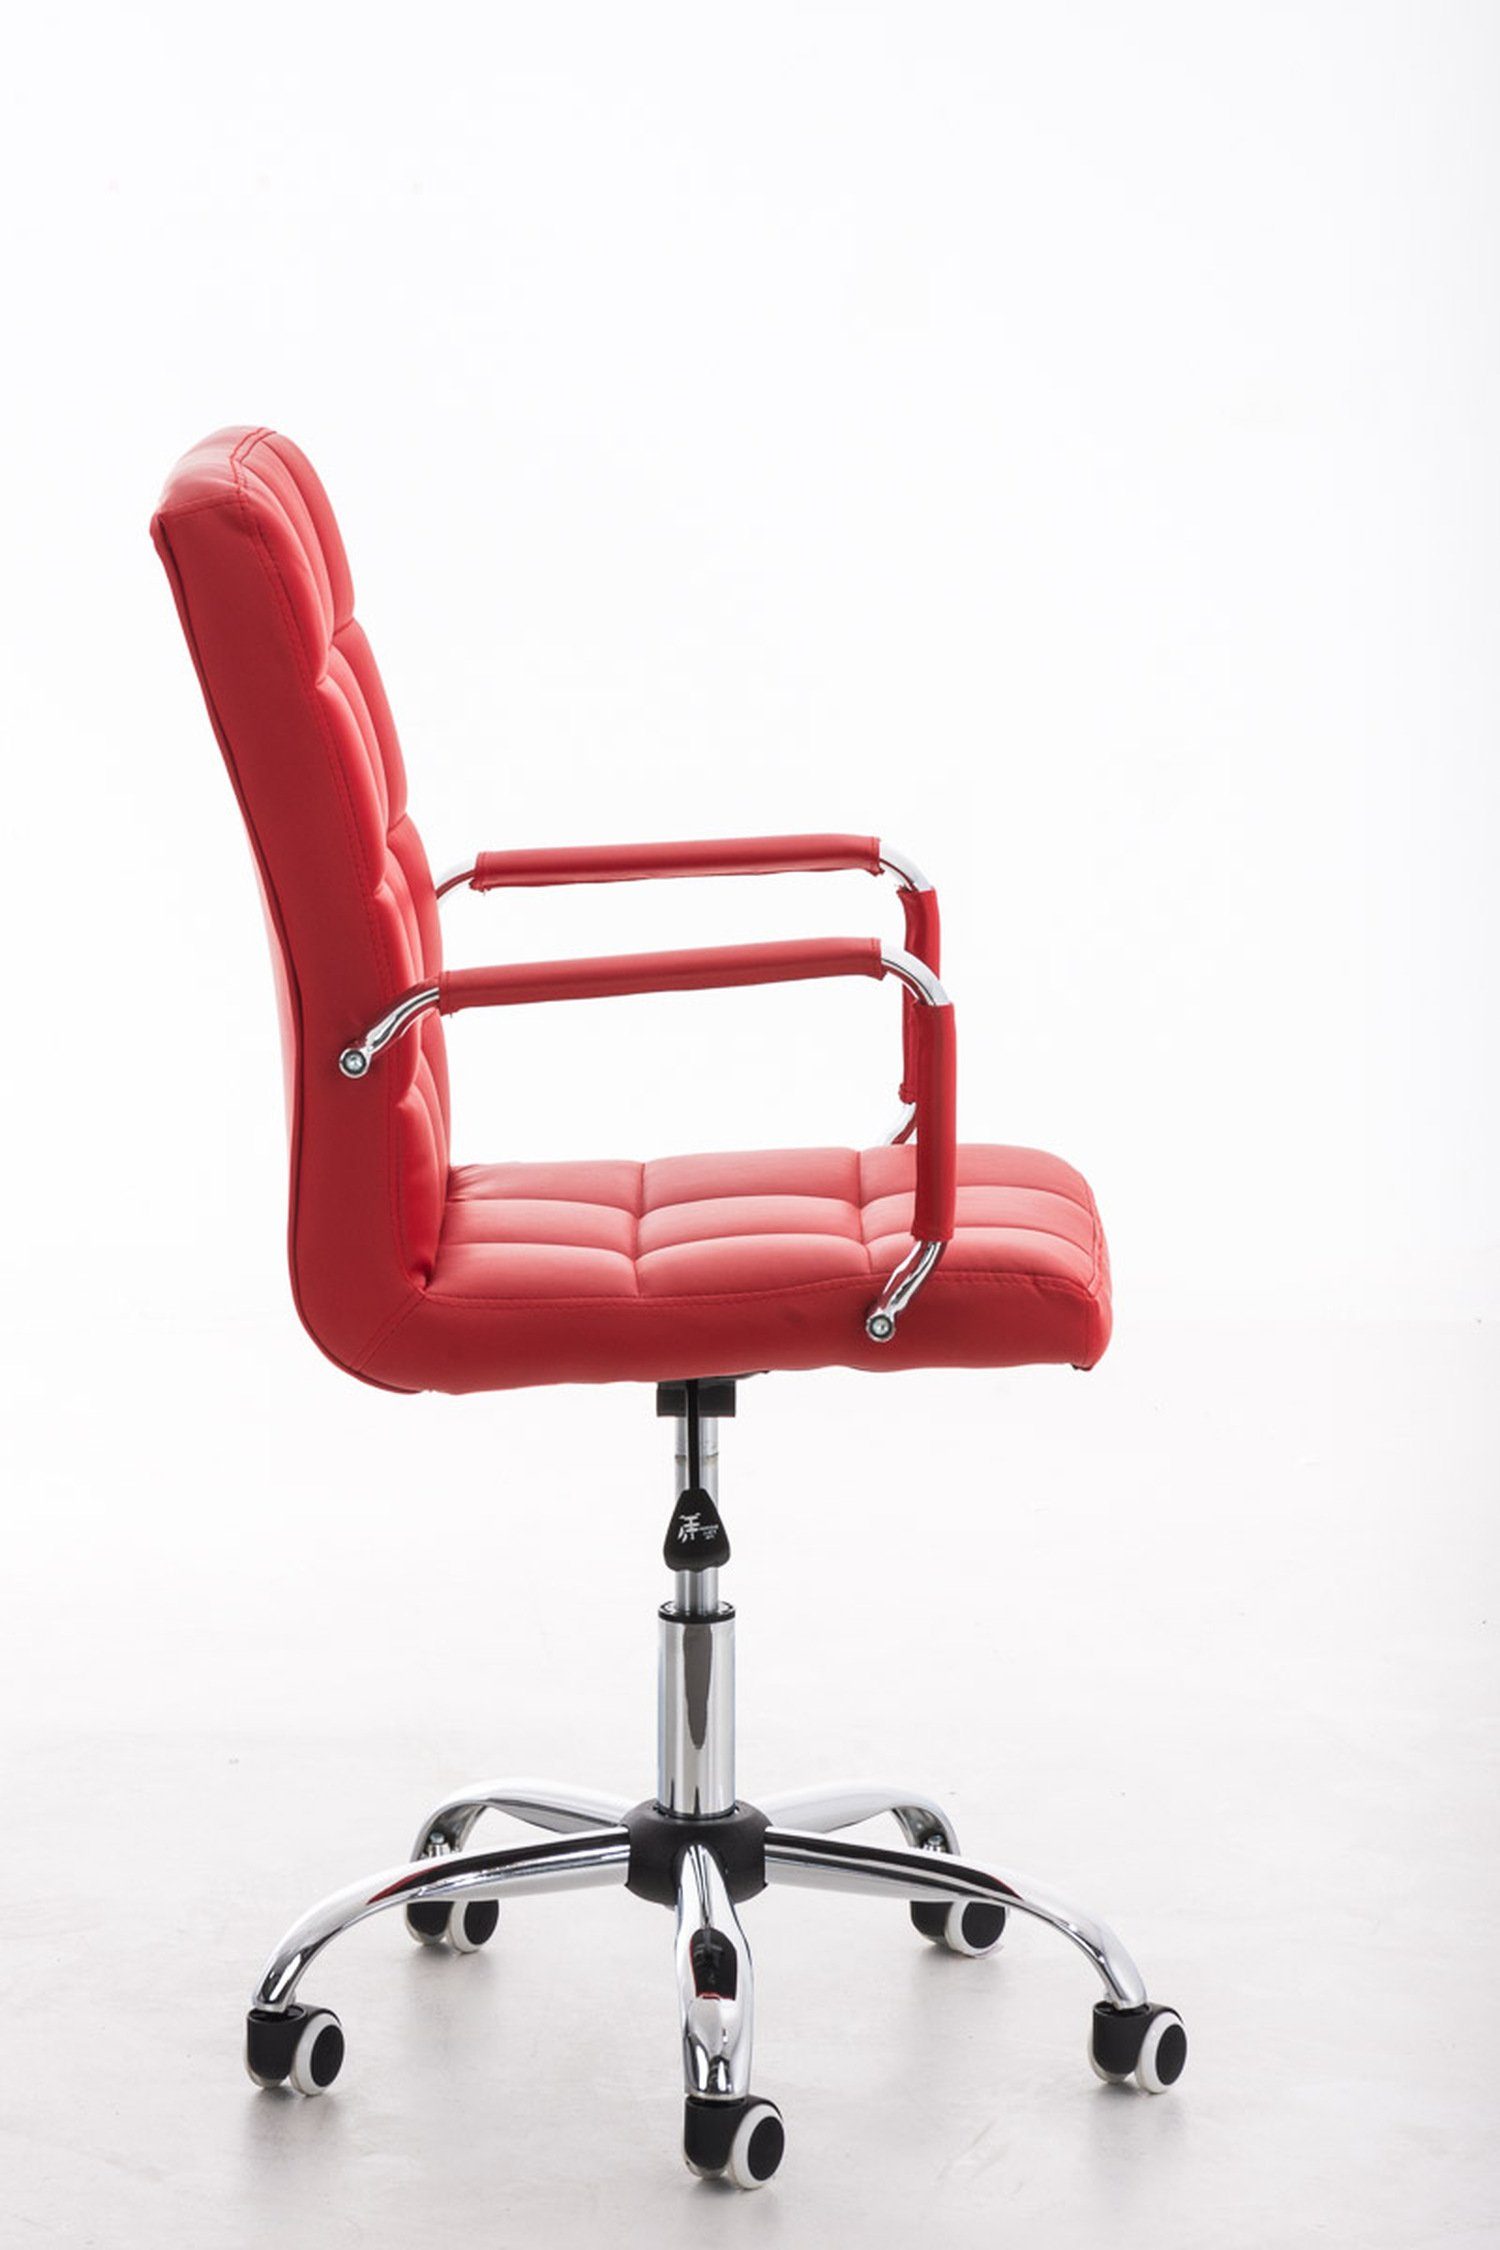 mit rot Kunstleder (Schreibtischstuhl, Rückenlehne chrom V2 Drehstuhl, TPFLiving - Bürostuhl bequemer Chefsessel), Deal Sitzfläche: Metall Konferenzstuhl, Gestell: